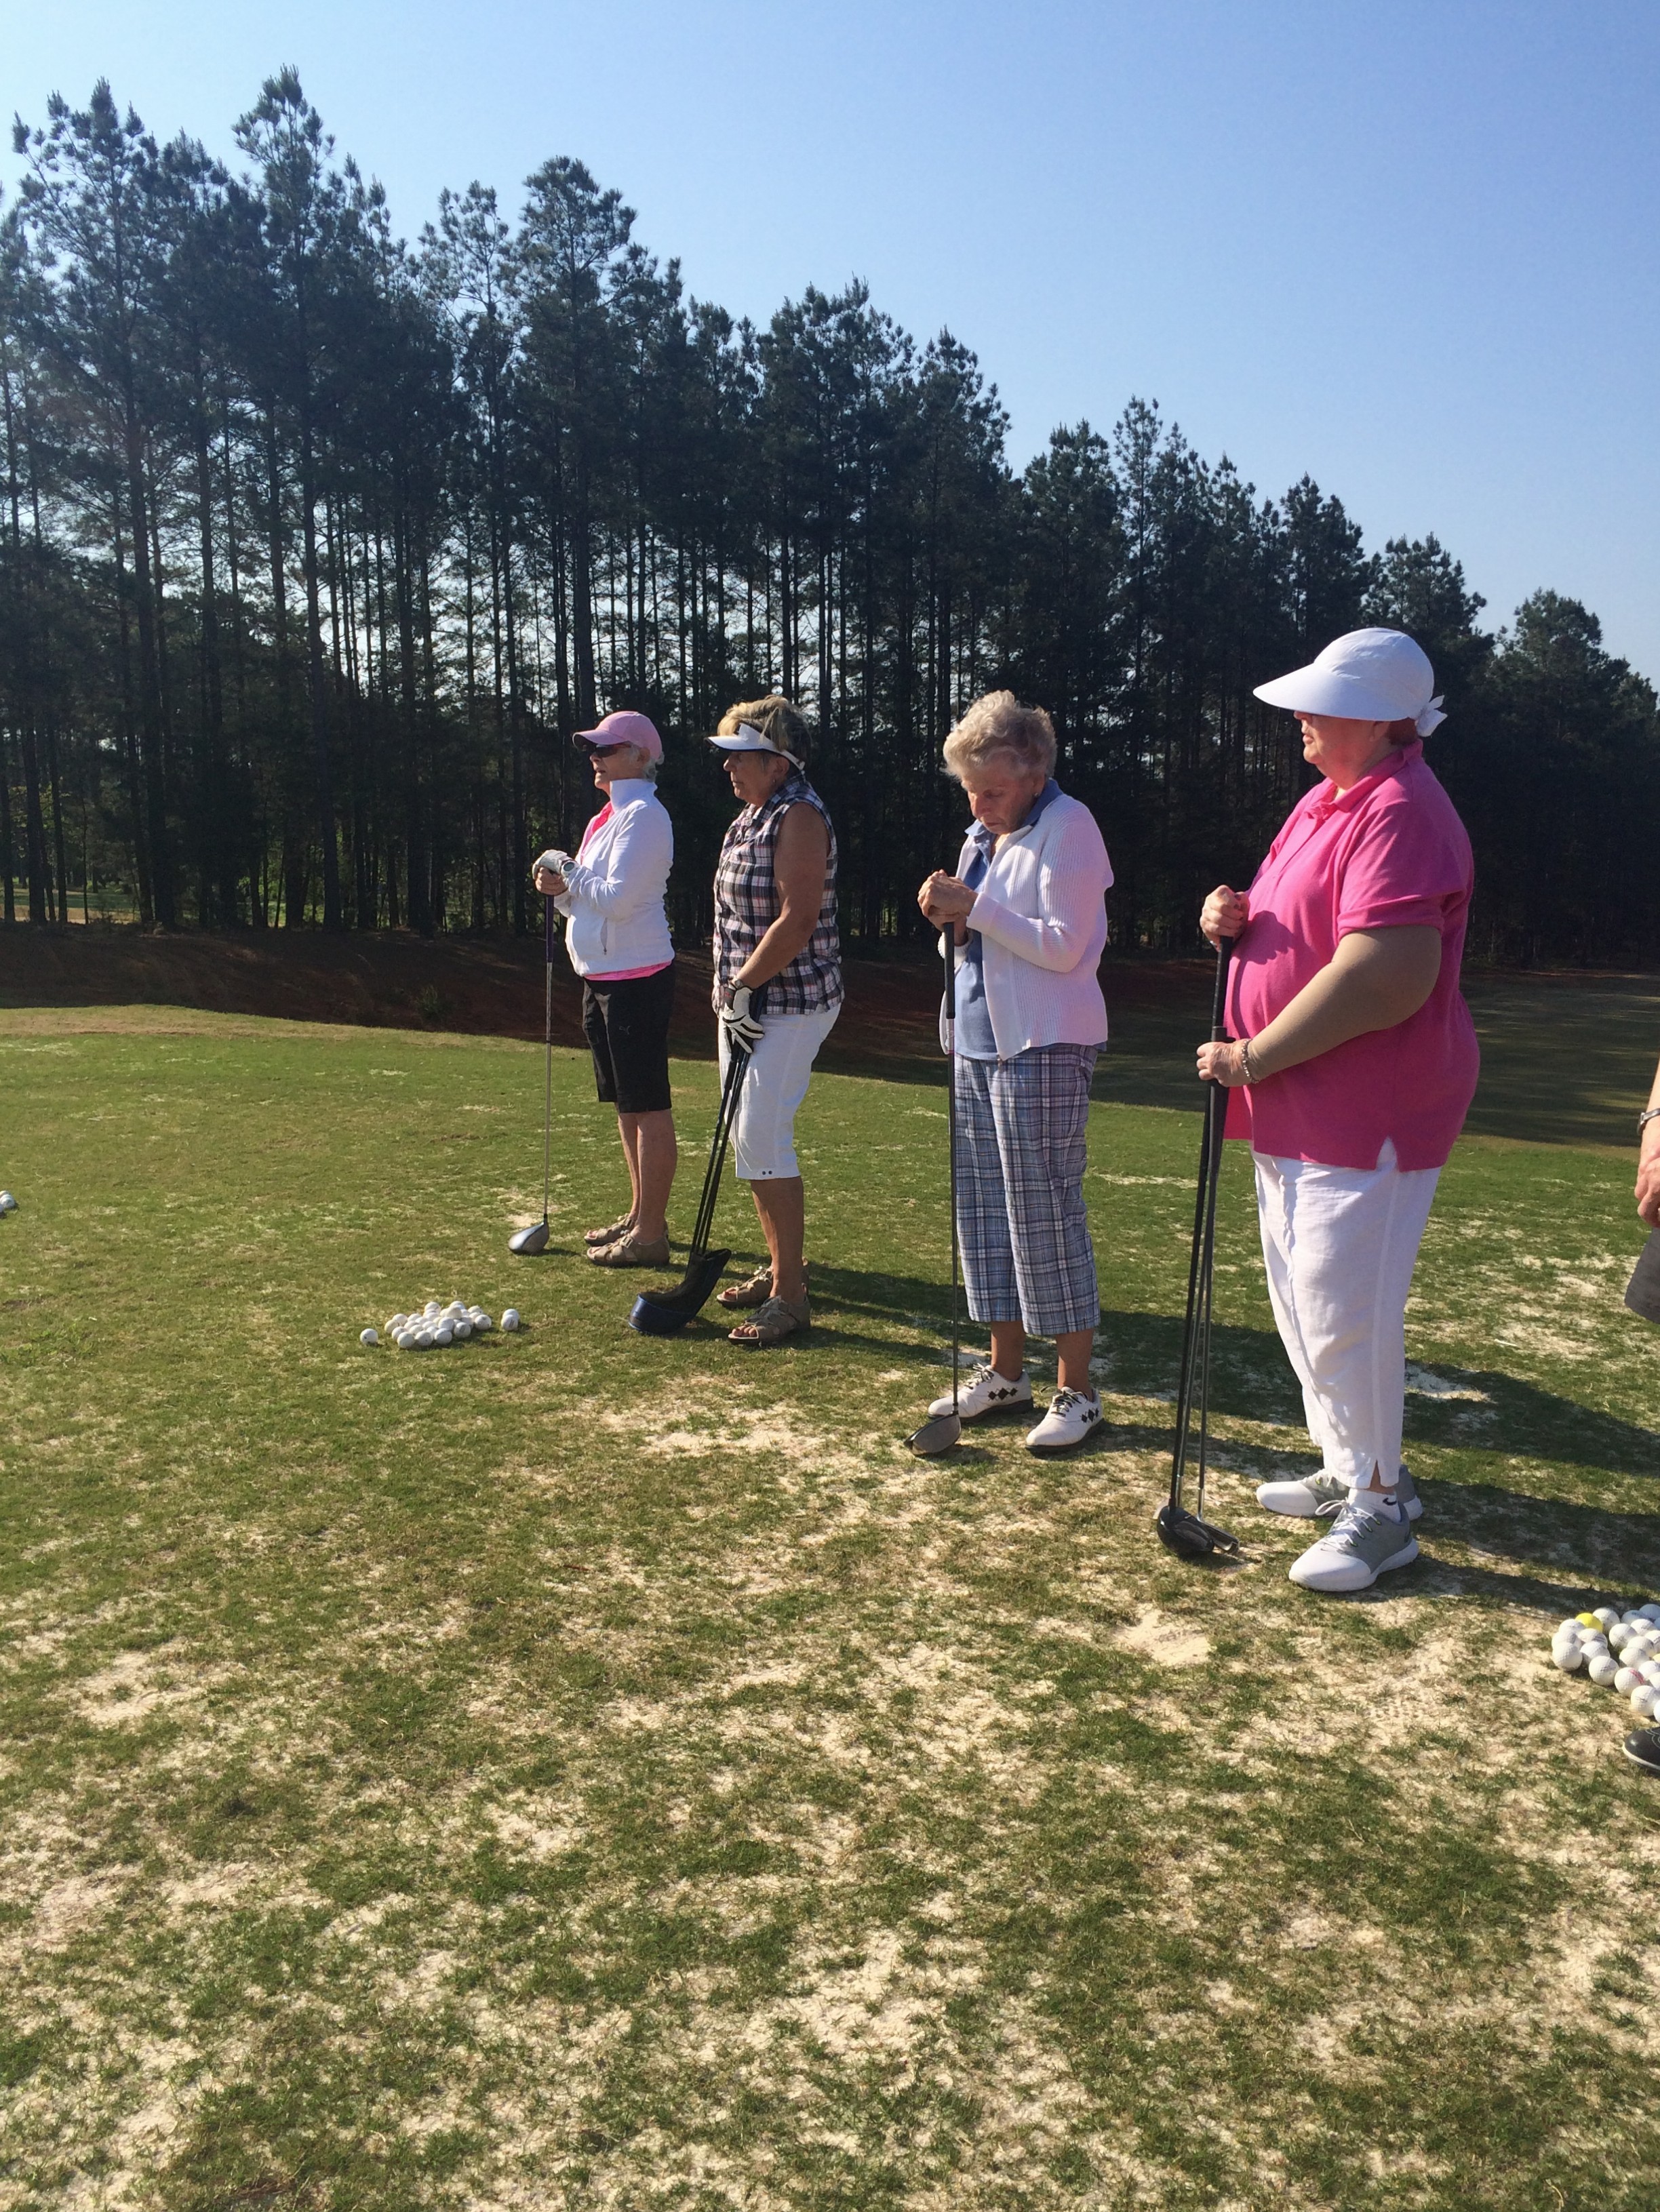 Ladies Edge 4/26/16 - Edgewater Golf Club2448 x 3263